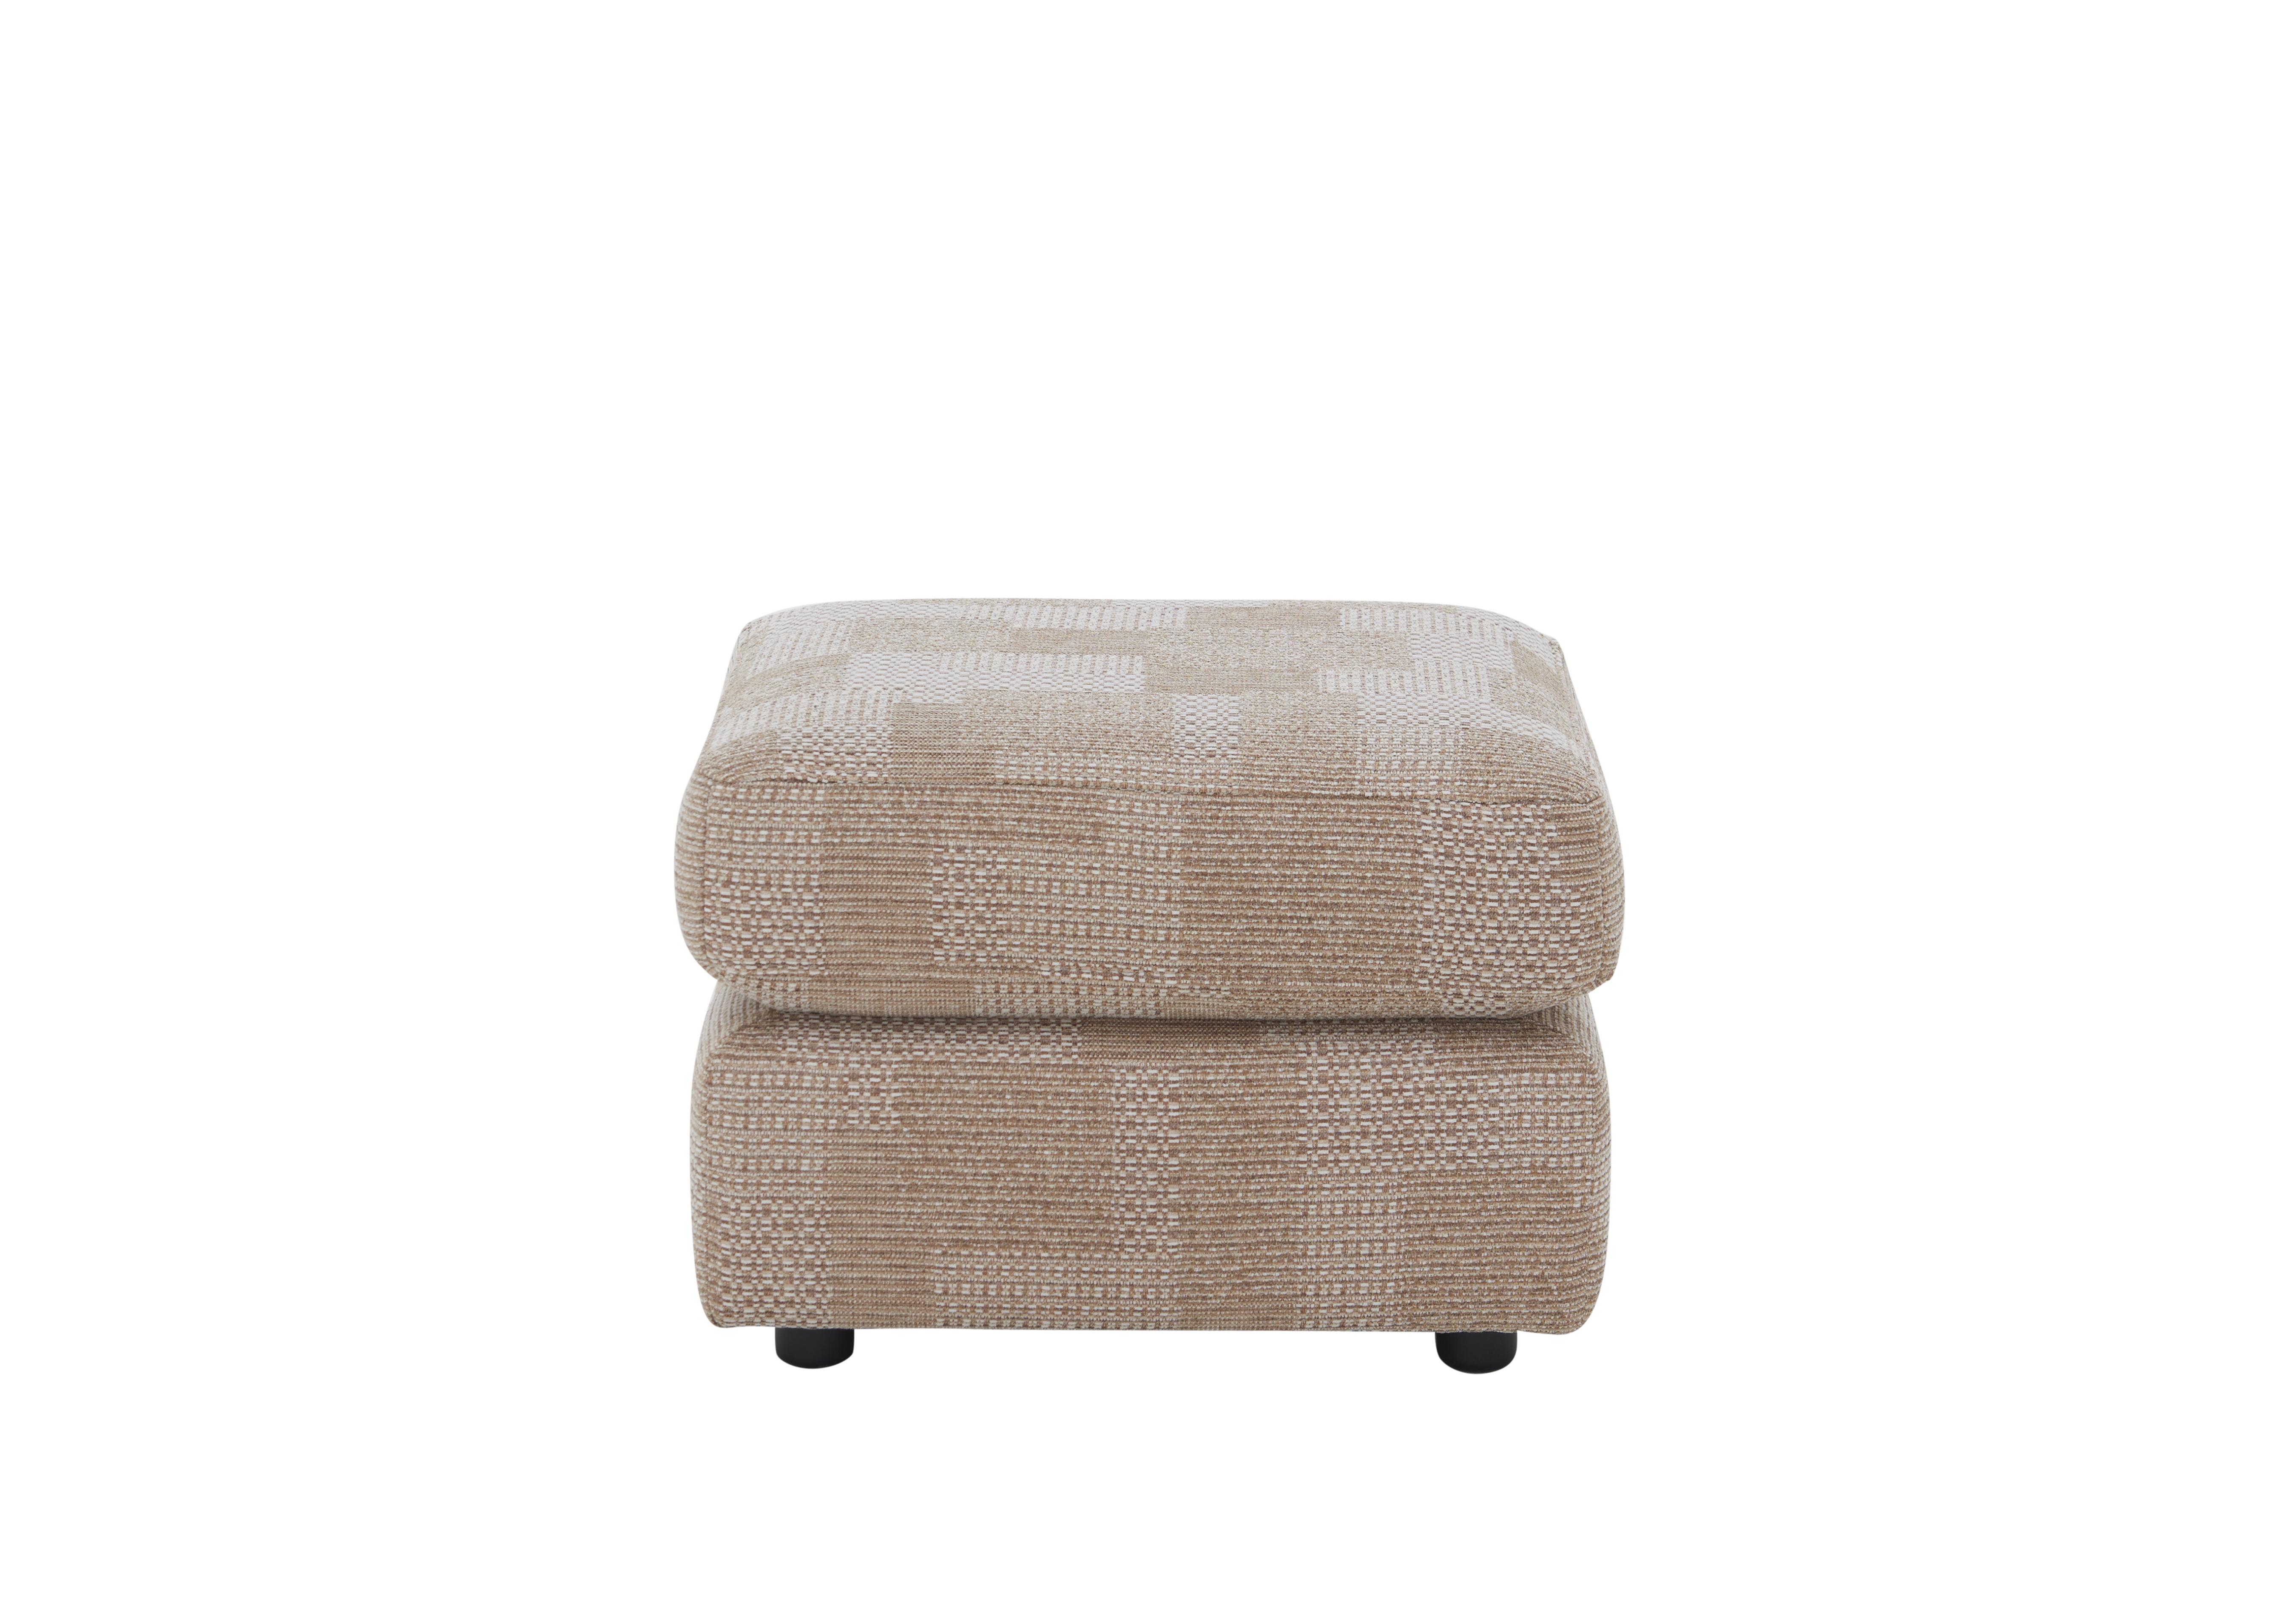 Avon Fabric Footstool in A800 Faro Sand on Furniture Village